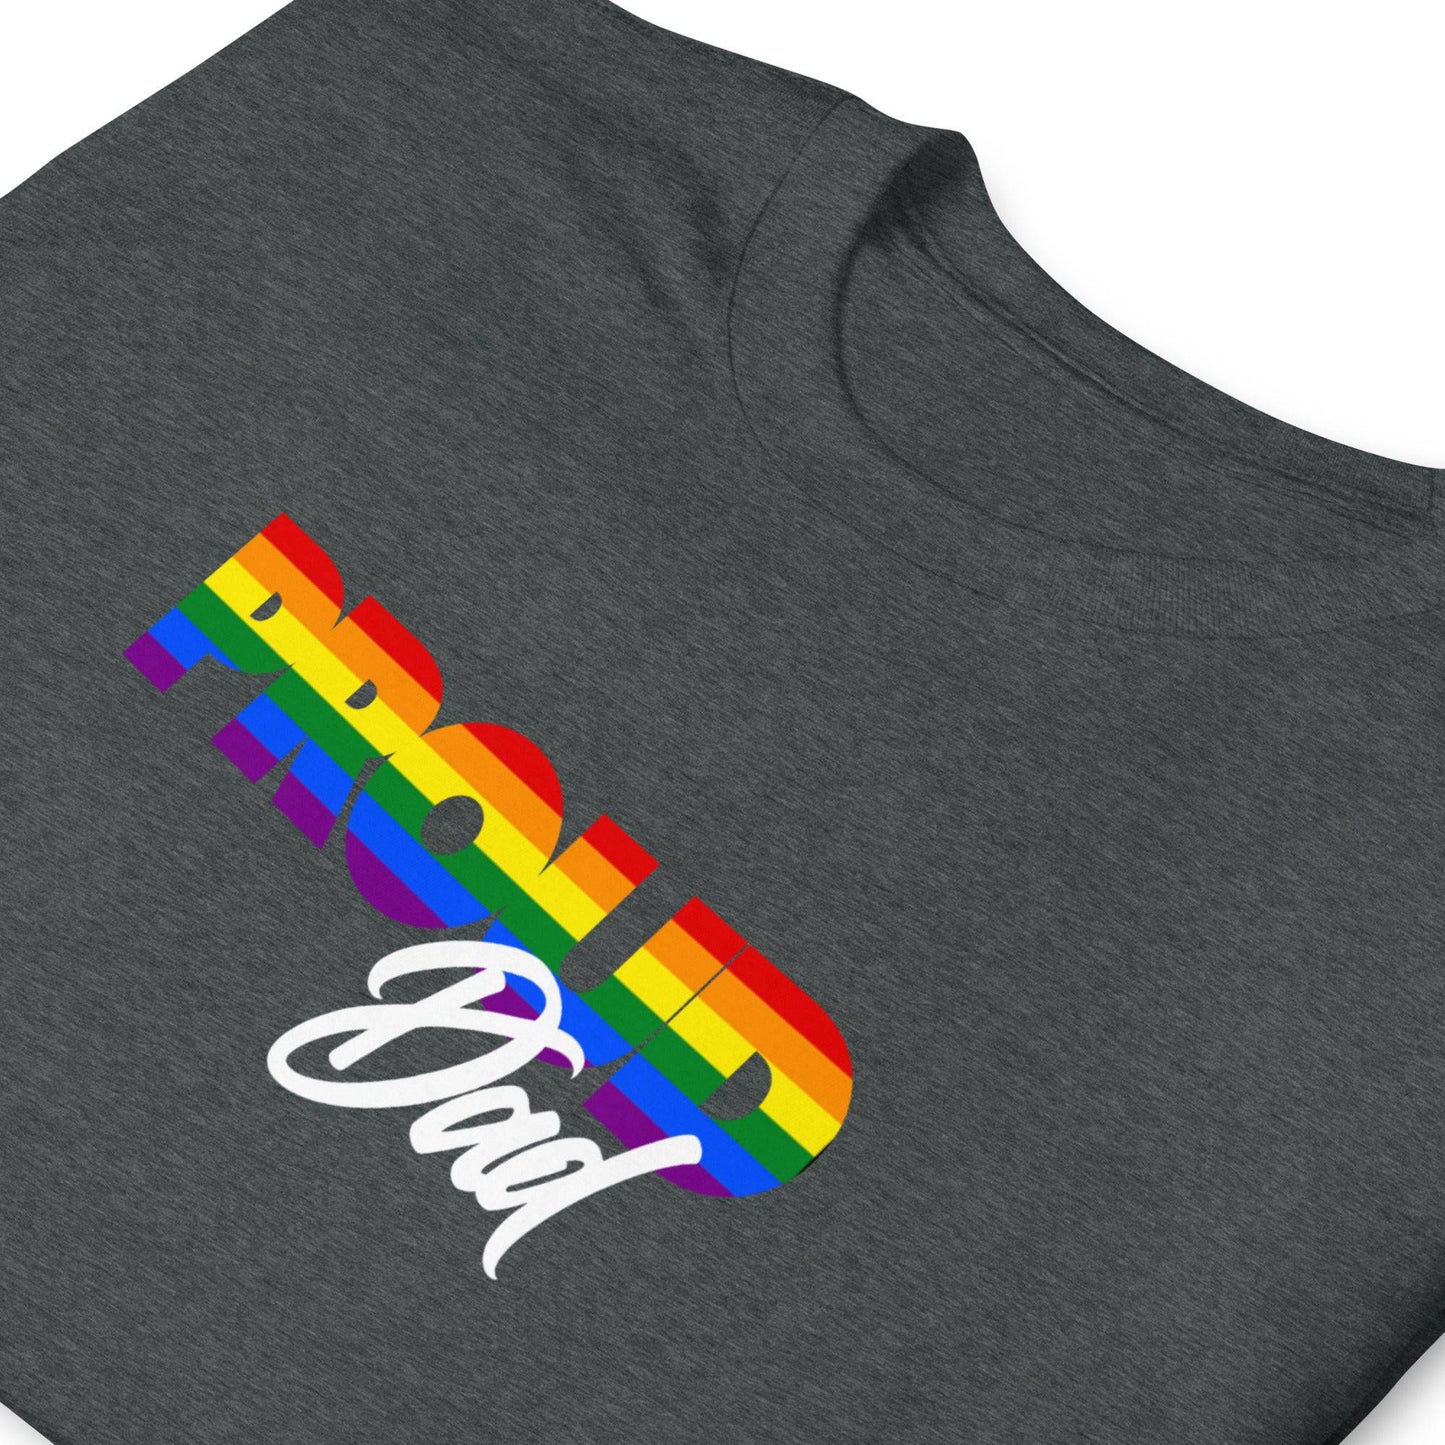 Proud Dad LGBT Pride Ally Shirt - Rose Gold Co. Shop